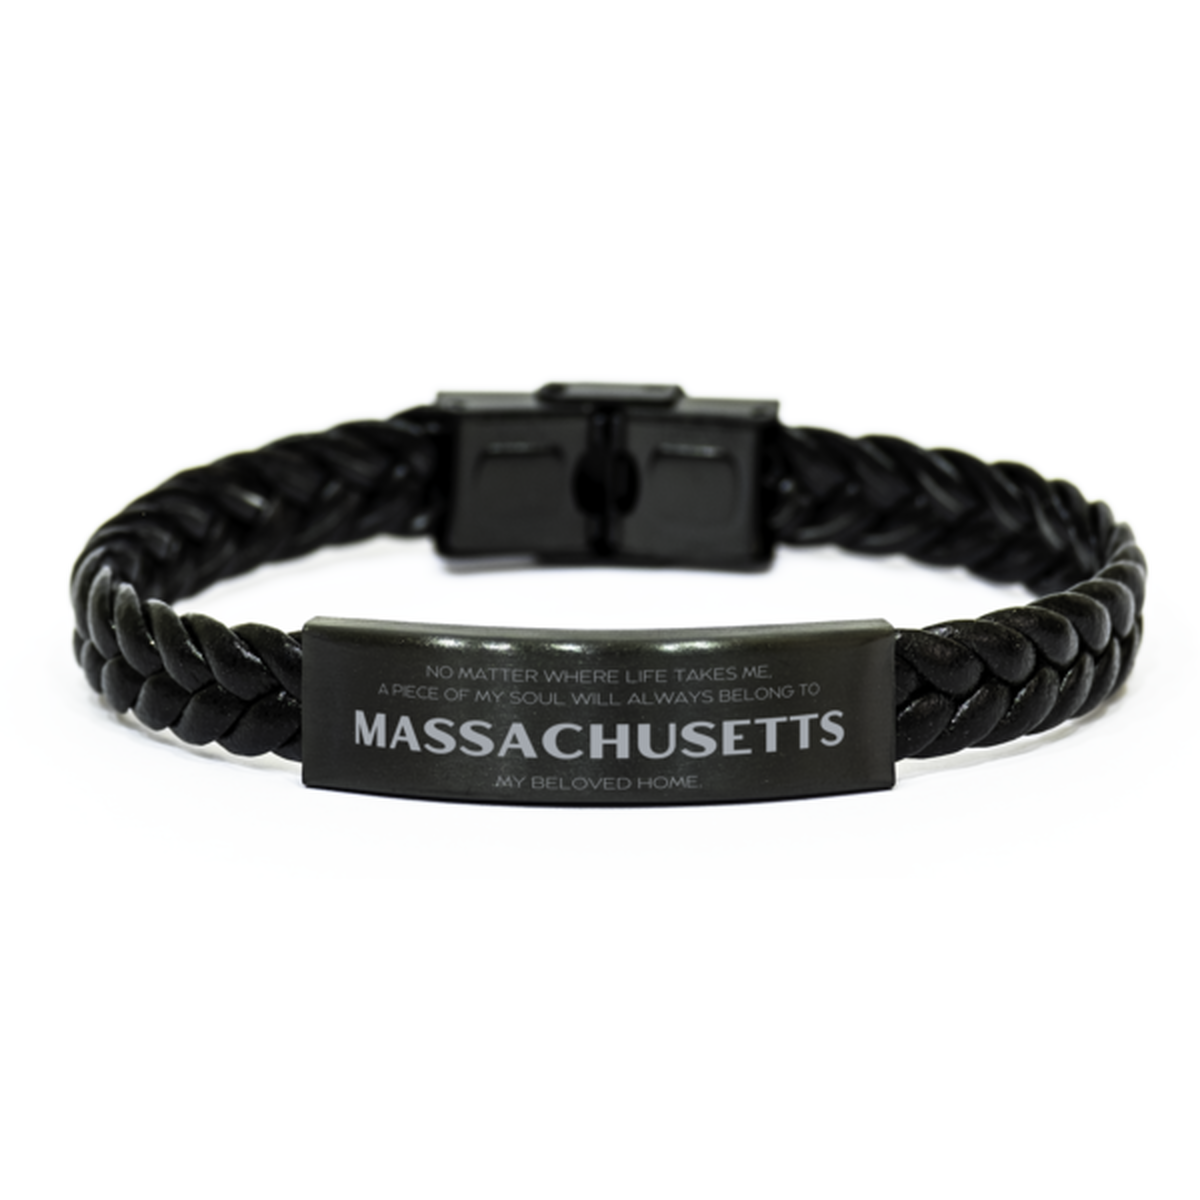 Love Massachusetts State Gifts, My soul will always belong to Massachusetts, Proud Braided Leather Bracelet, Birthday Unique Gifts For Massachusetts Men, Women, Friends